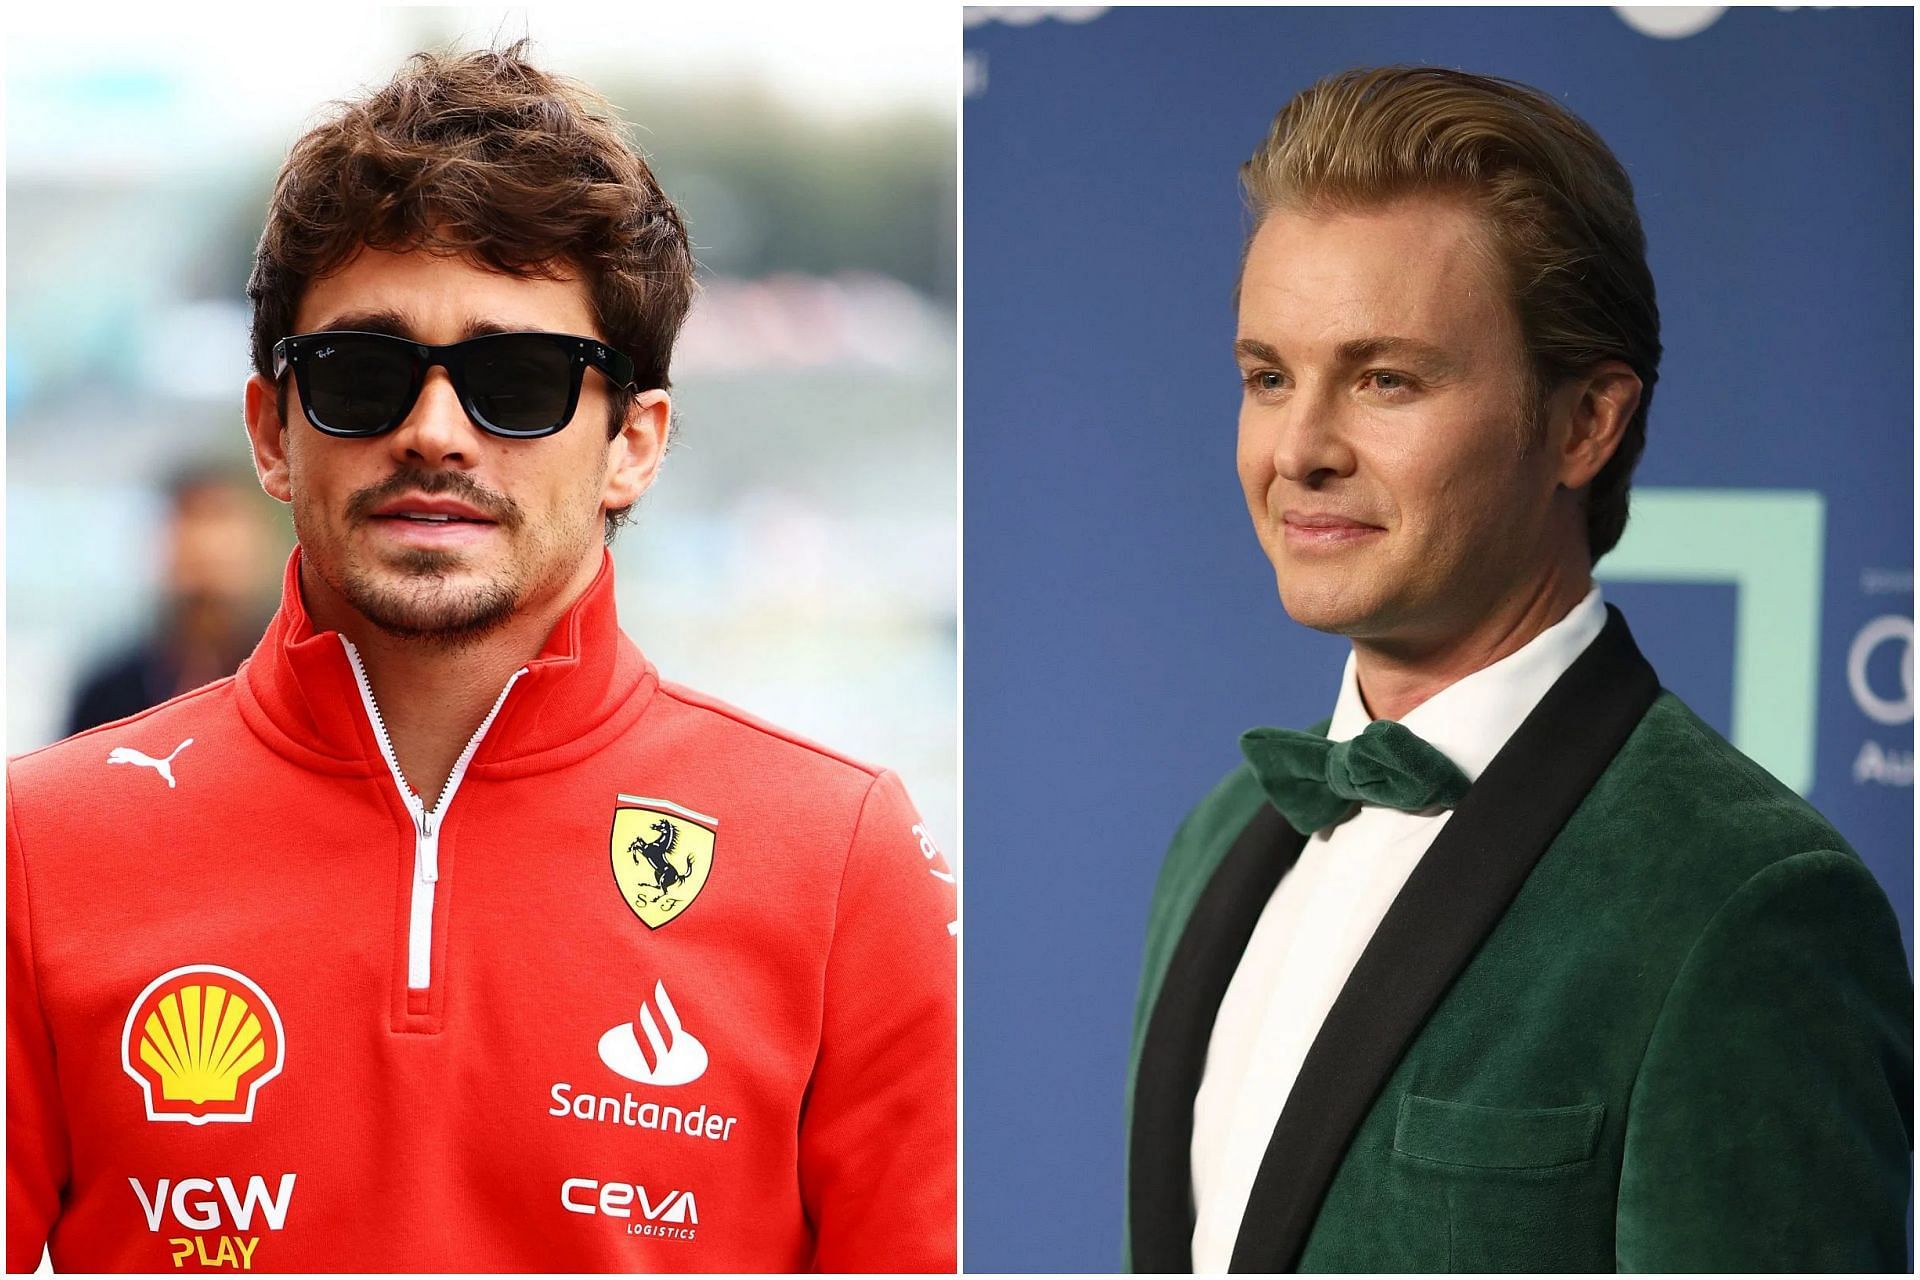  Charles Leclerc (L) and Nico Rosberg (R) (Collage via Sportskeeda)